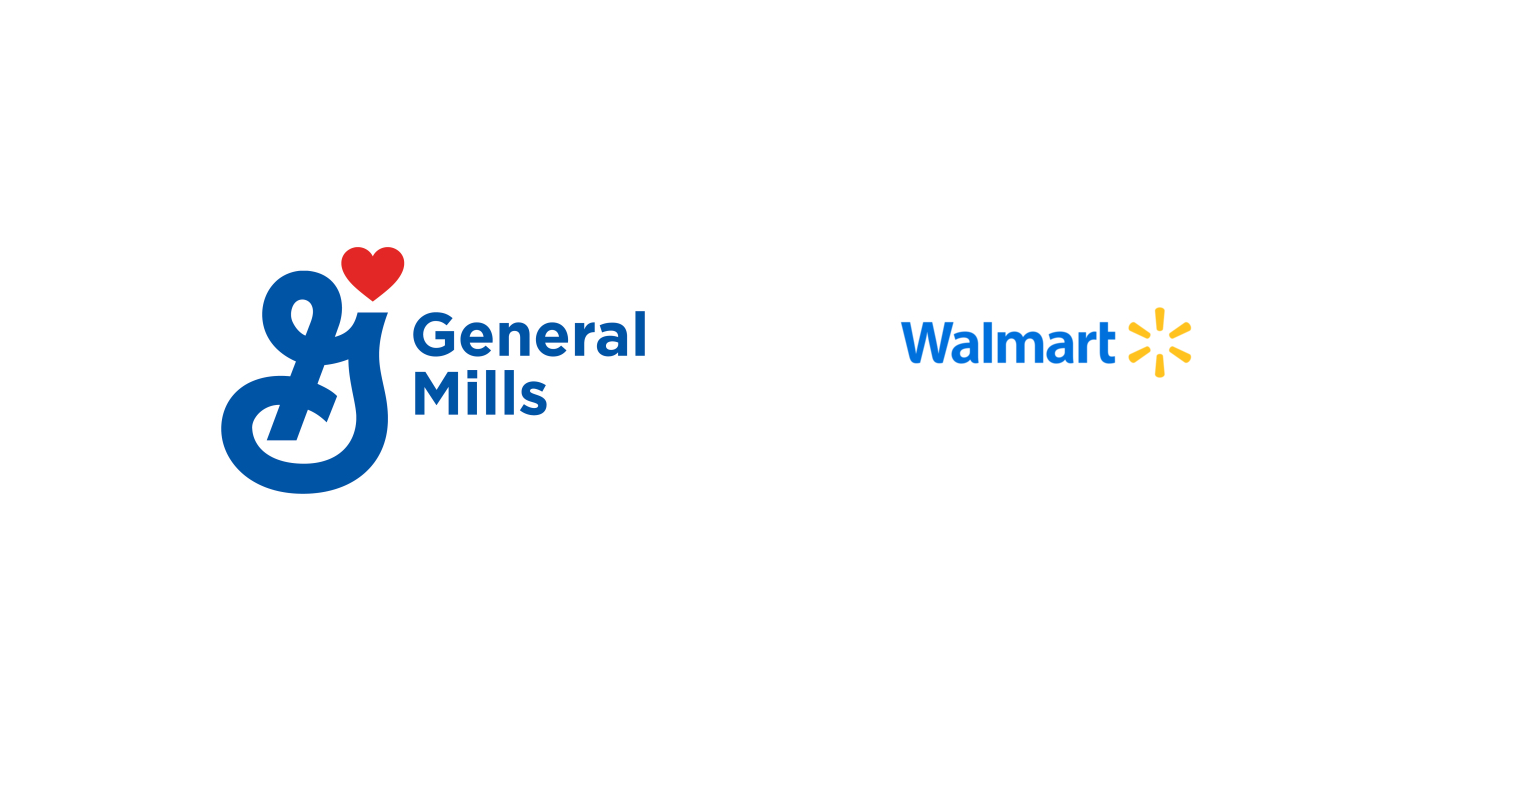 Walmart-min - Transparent Walmart Logo Transparent PNG - 768x768 - Free  Download on NicePNG